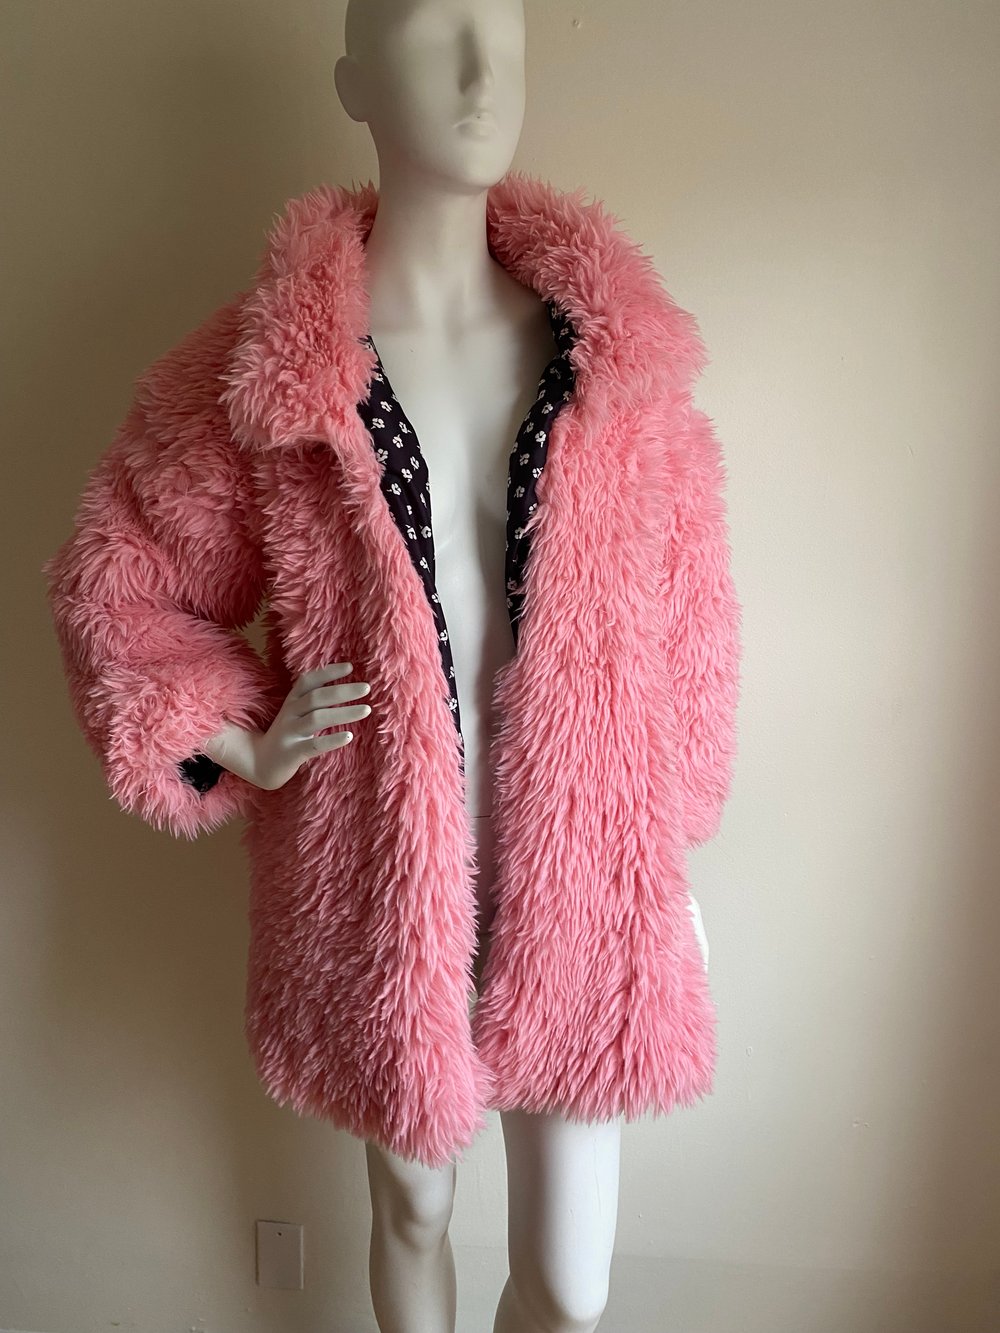 Image of pink fuzzy bear coat